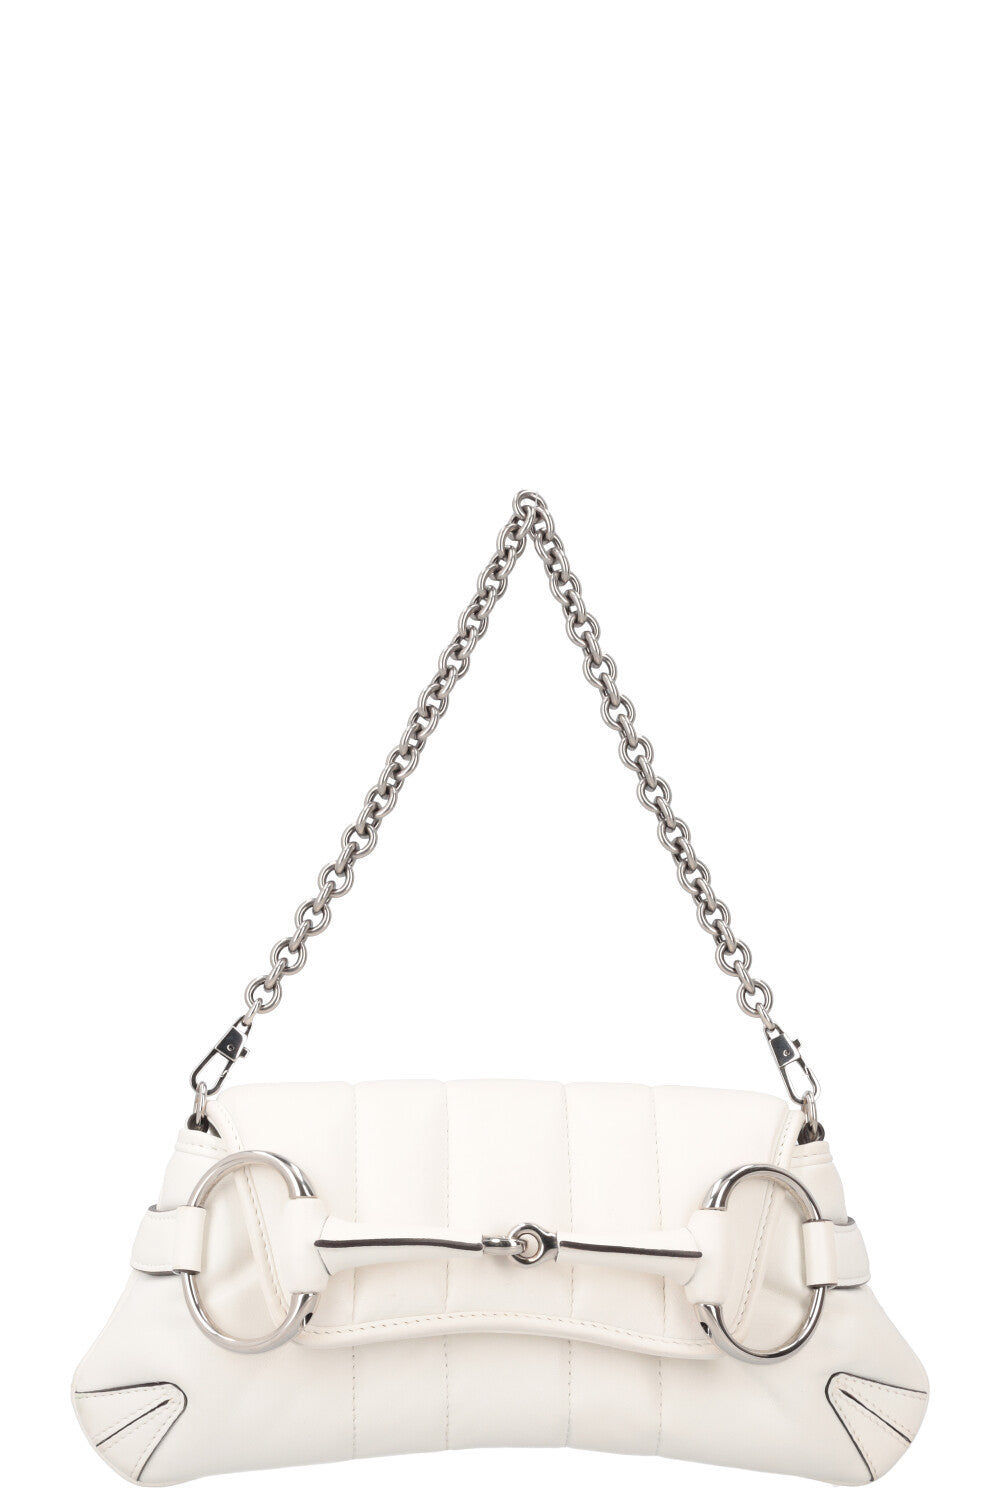 GUCCI Horsebit Chain Small Bag Leather White